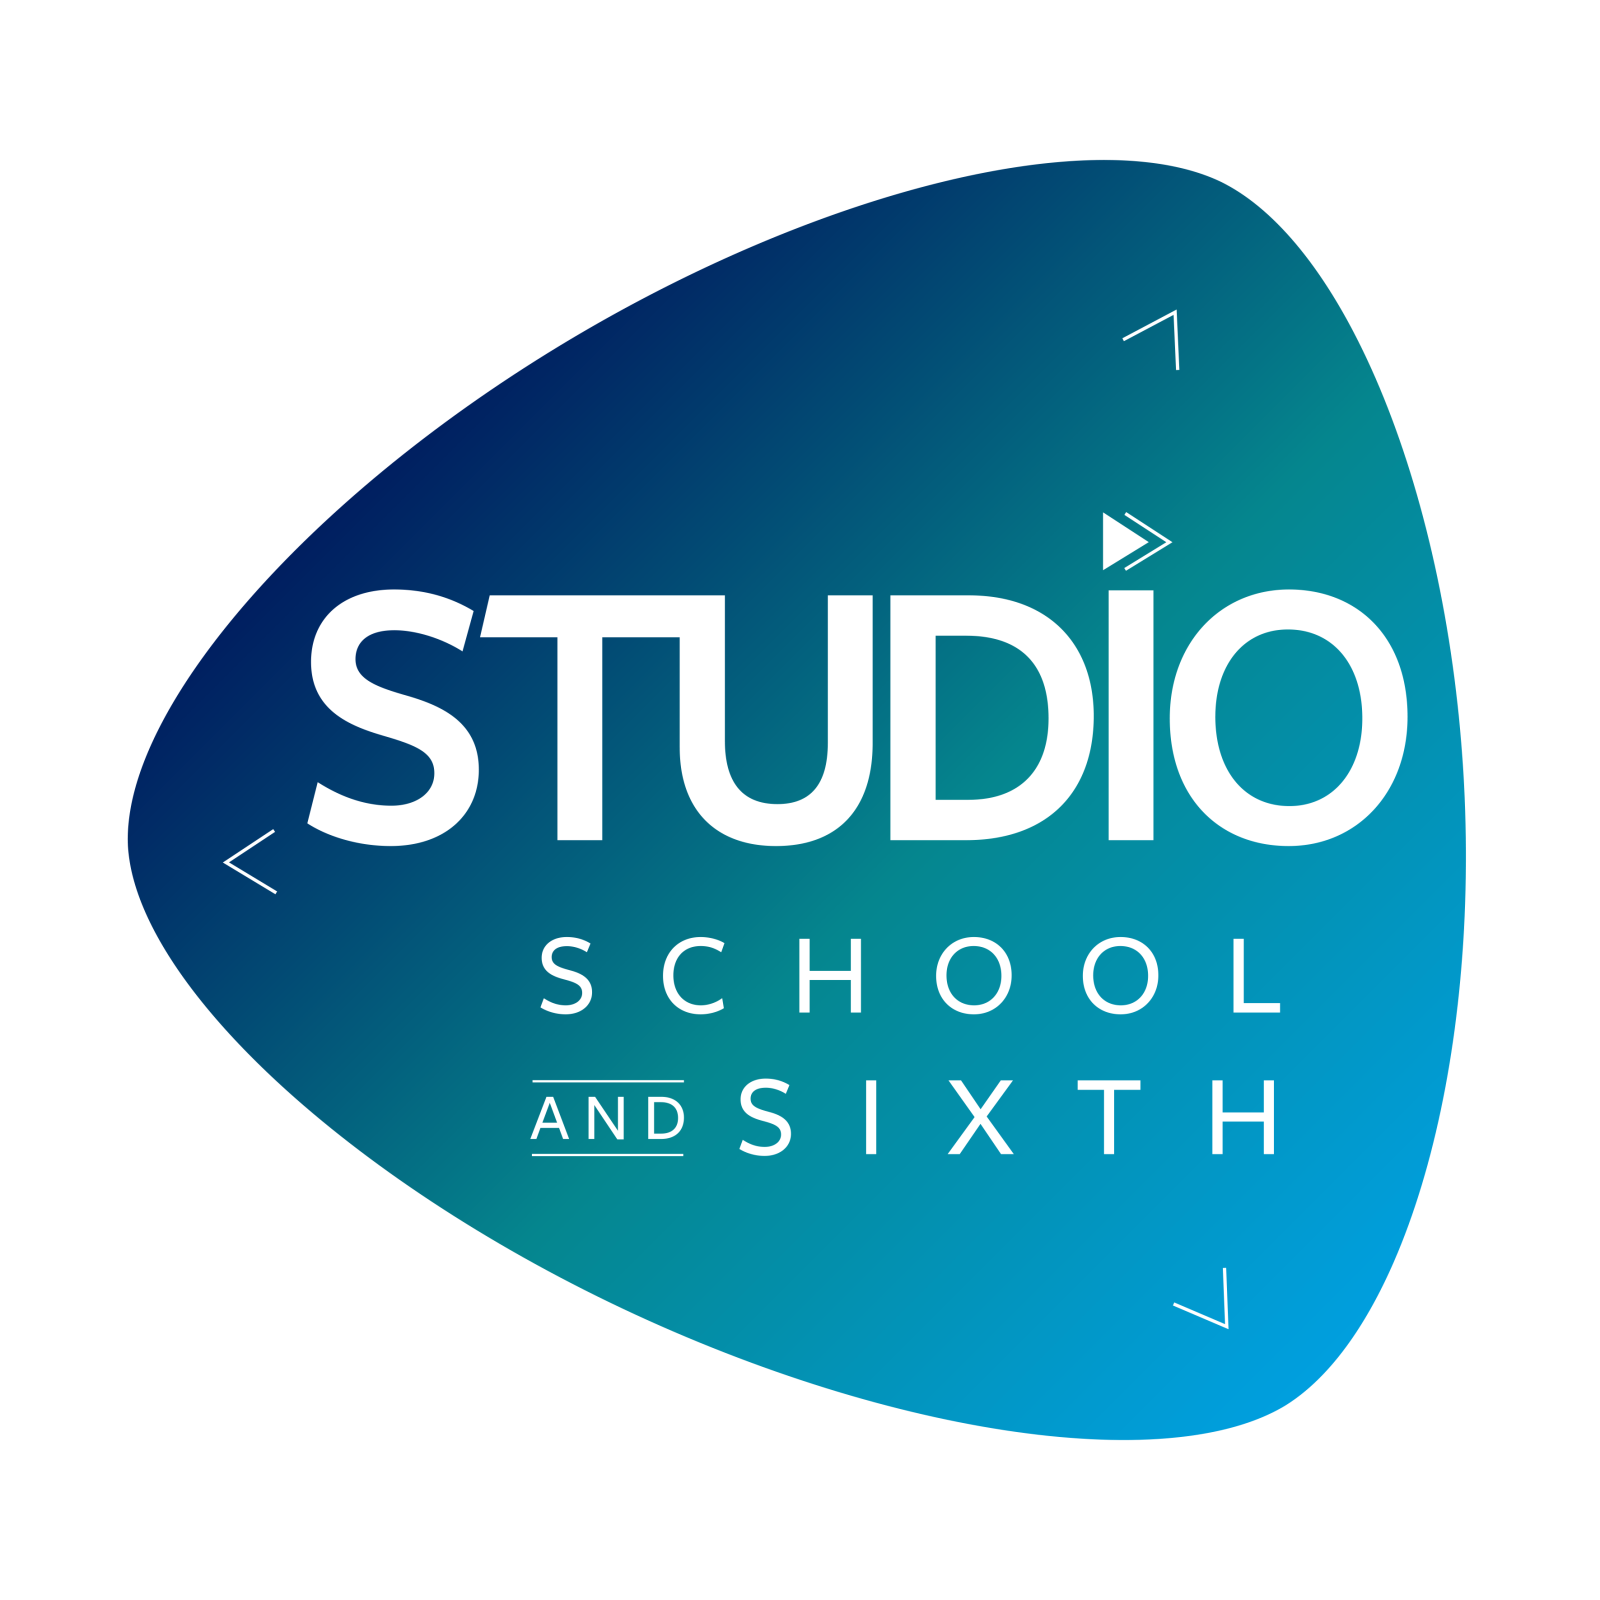 Studio School & Sixth logo